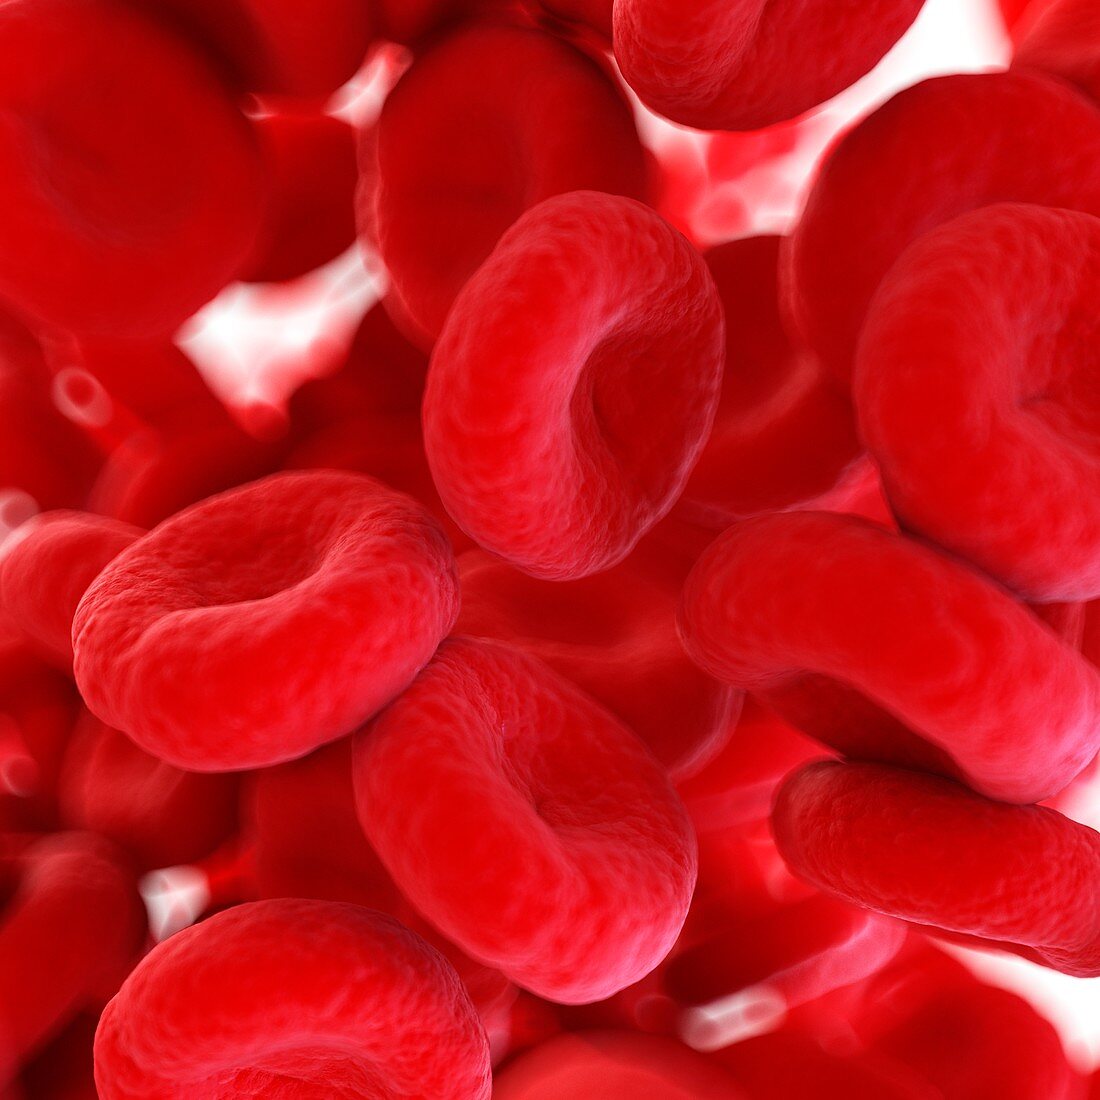 Illustration of human blood cells